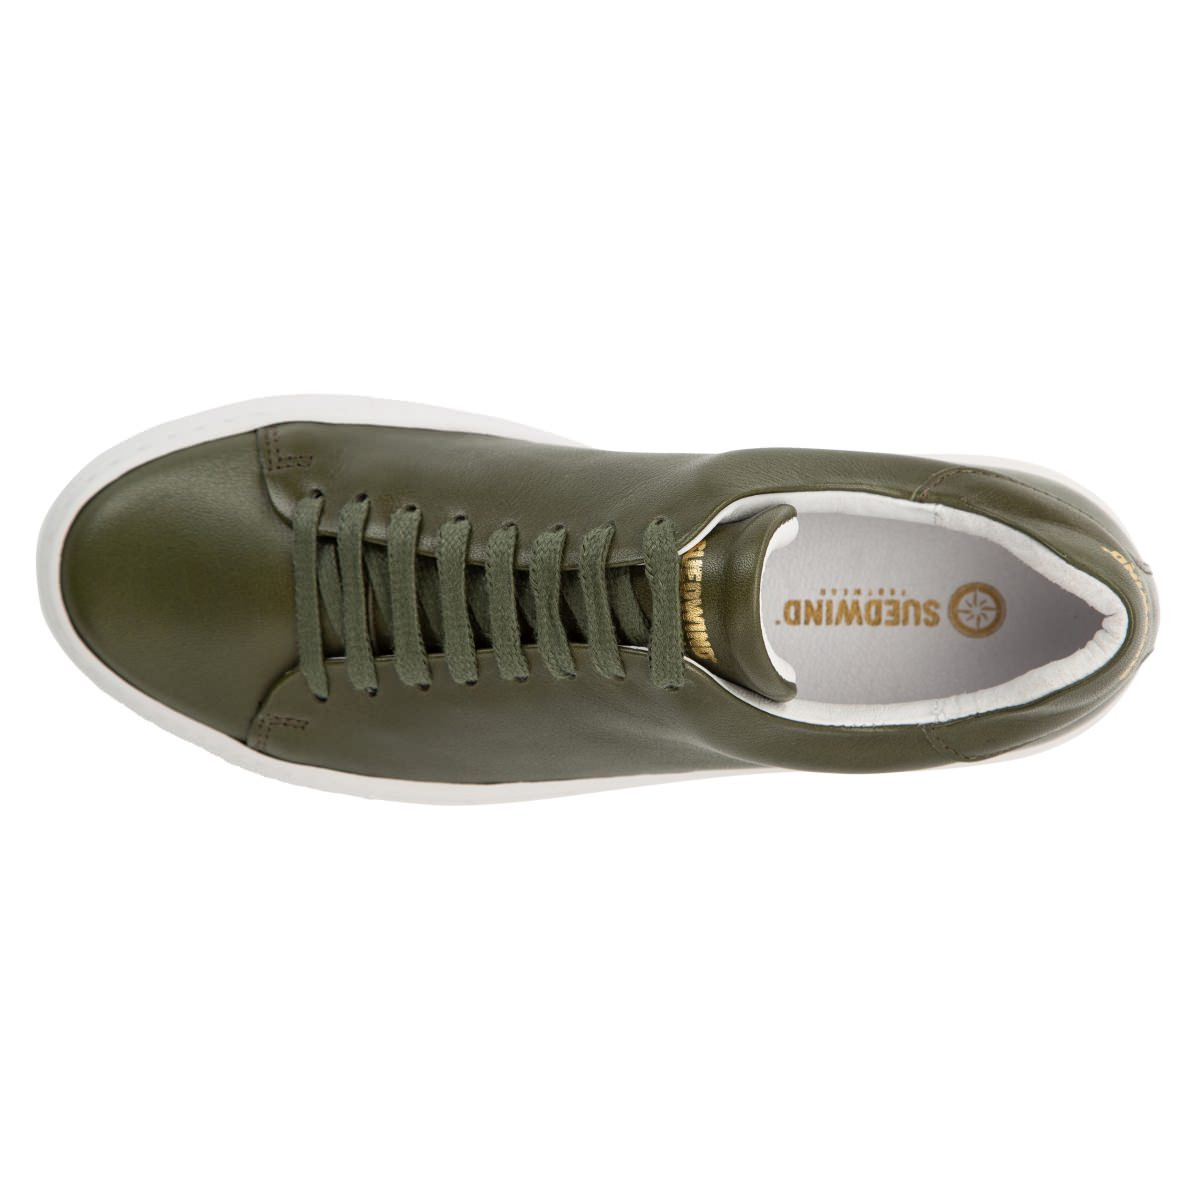 Suedwind-Ashton-Leather-Leder-Sneaker-Schuhe-Boots-Green-Gruen-10170028-06_1280x1280